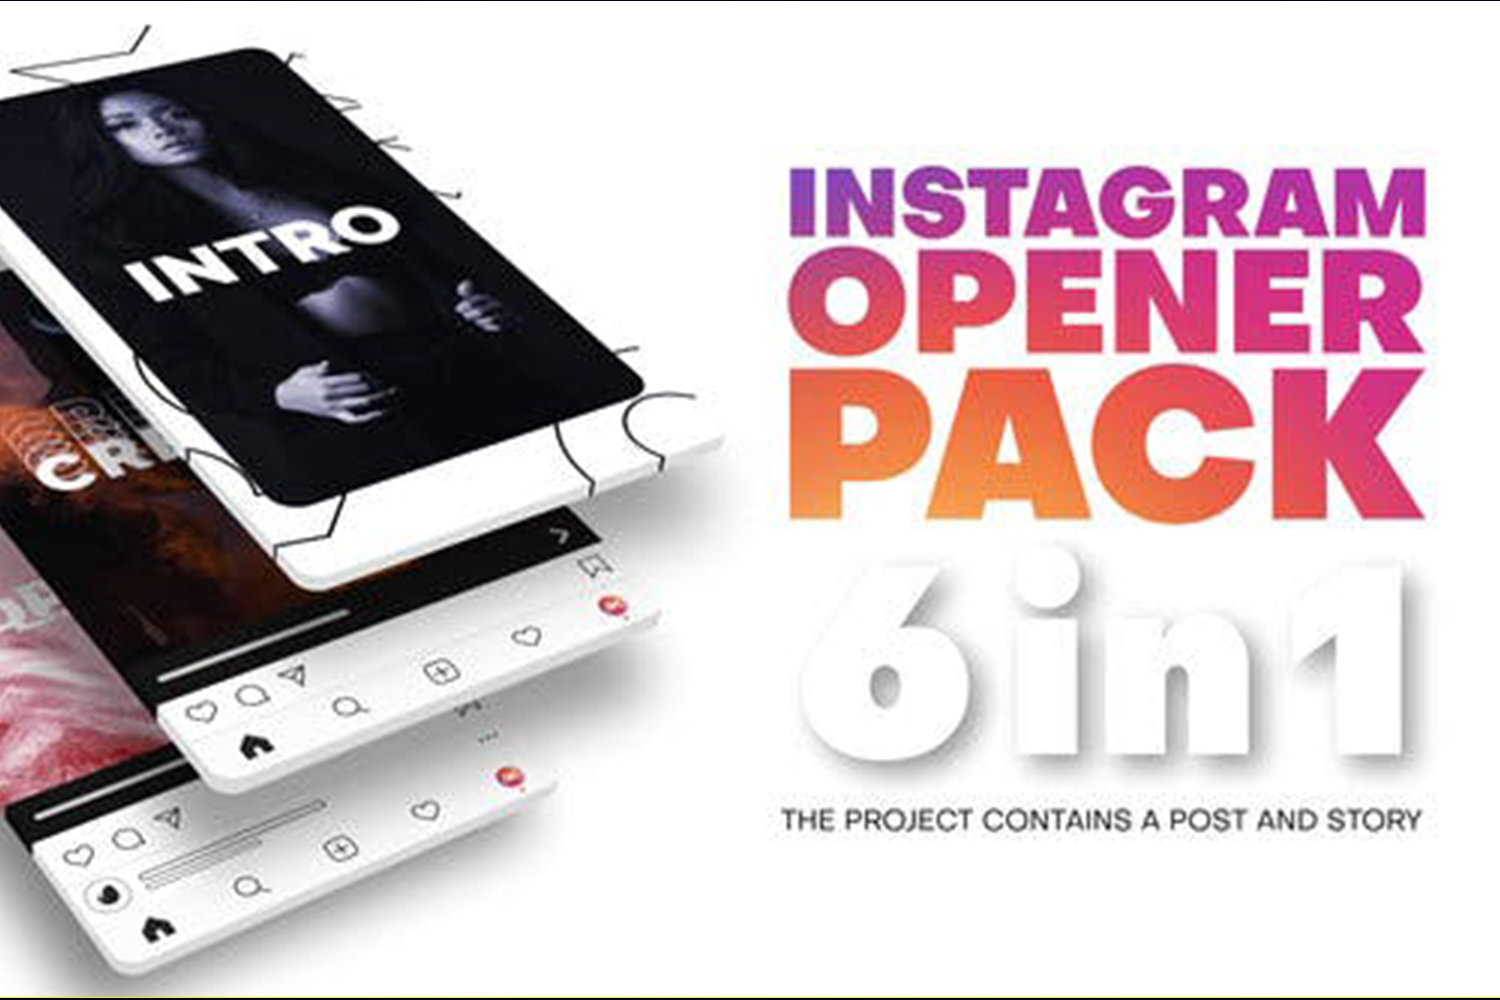 2033 社交媒体朋友圈动态海报视频AE模板素材 Instagram Opener Pack